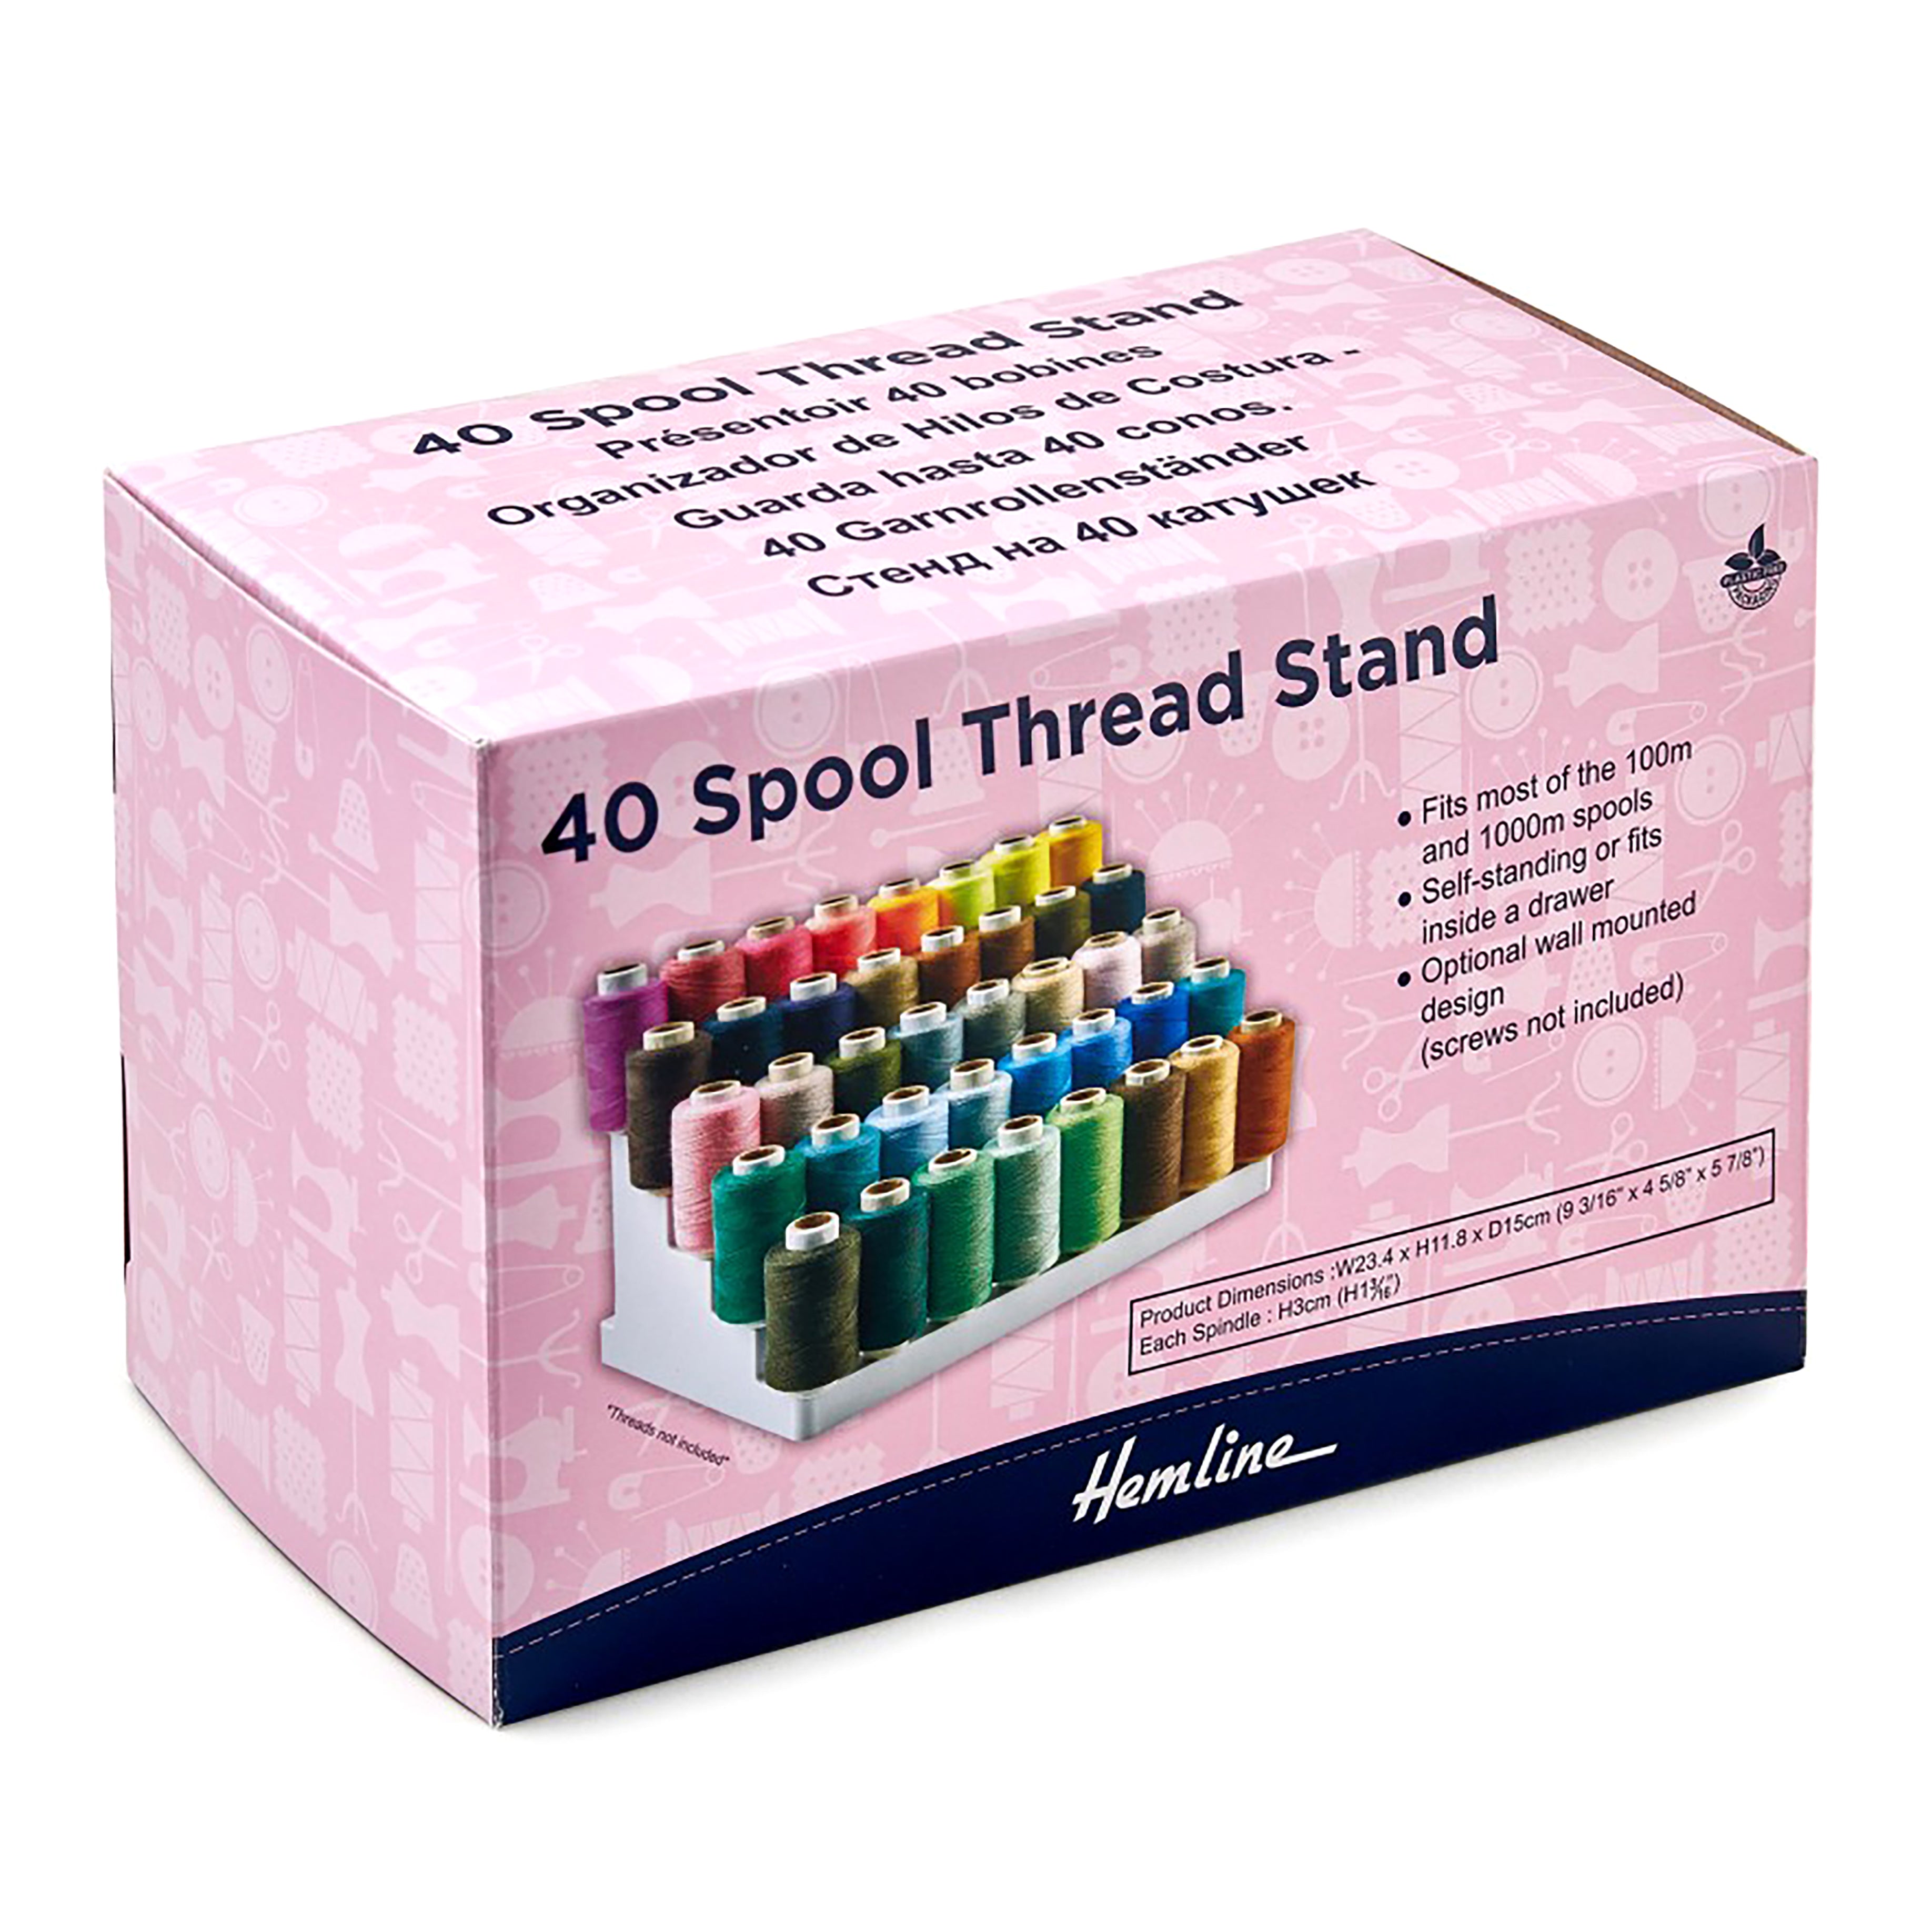 40 Spool Thread Stand